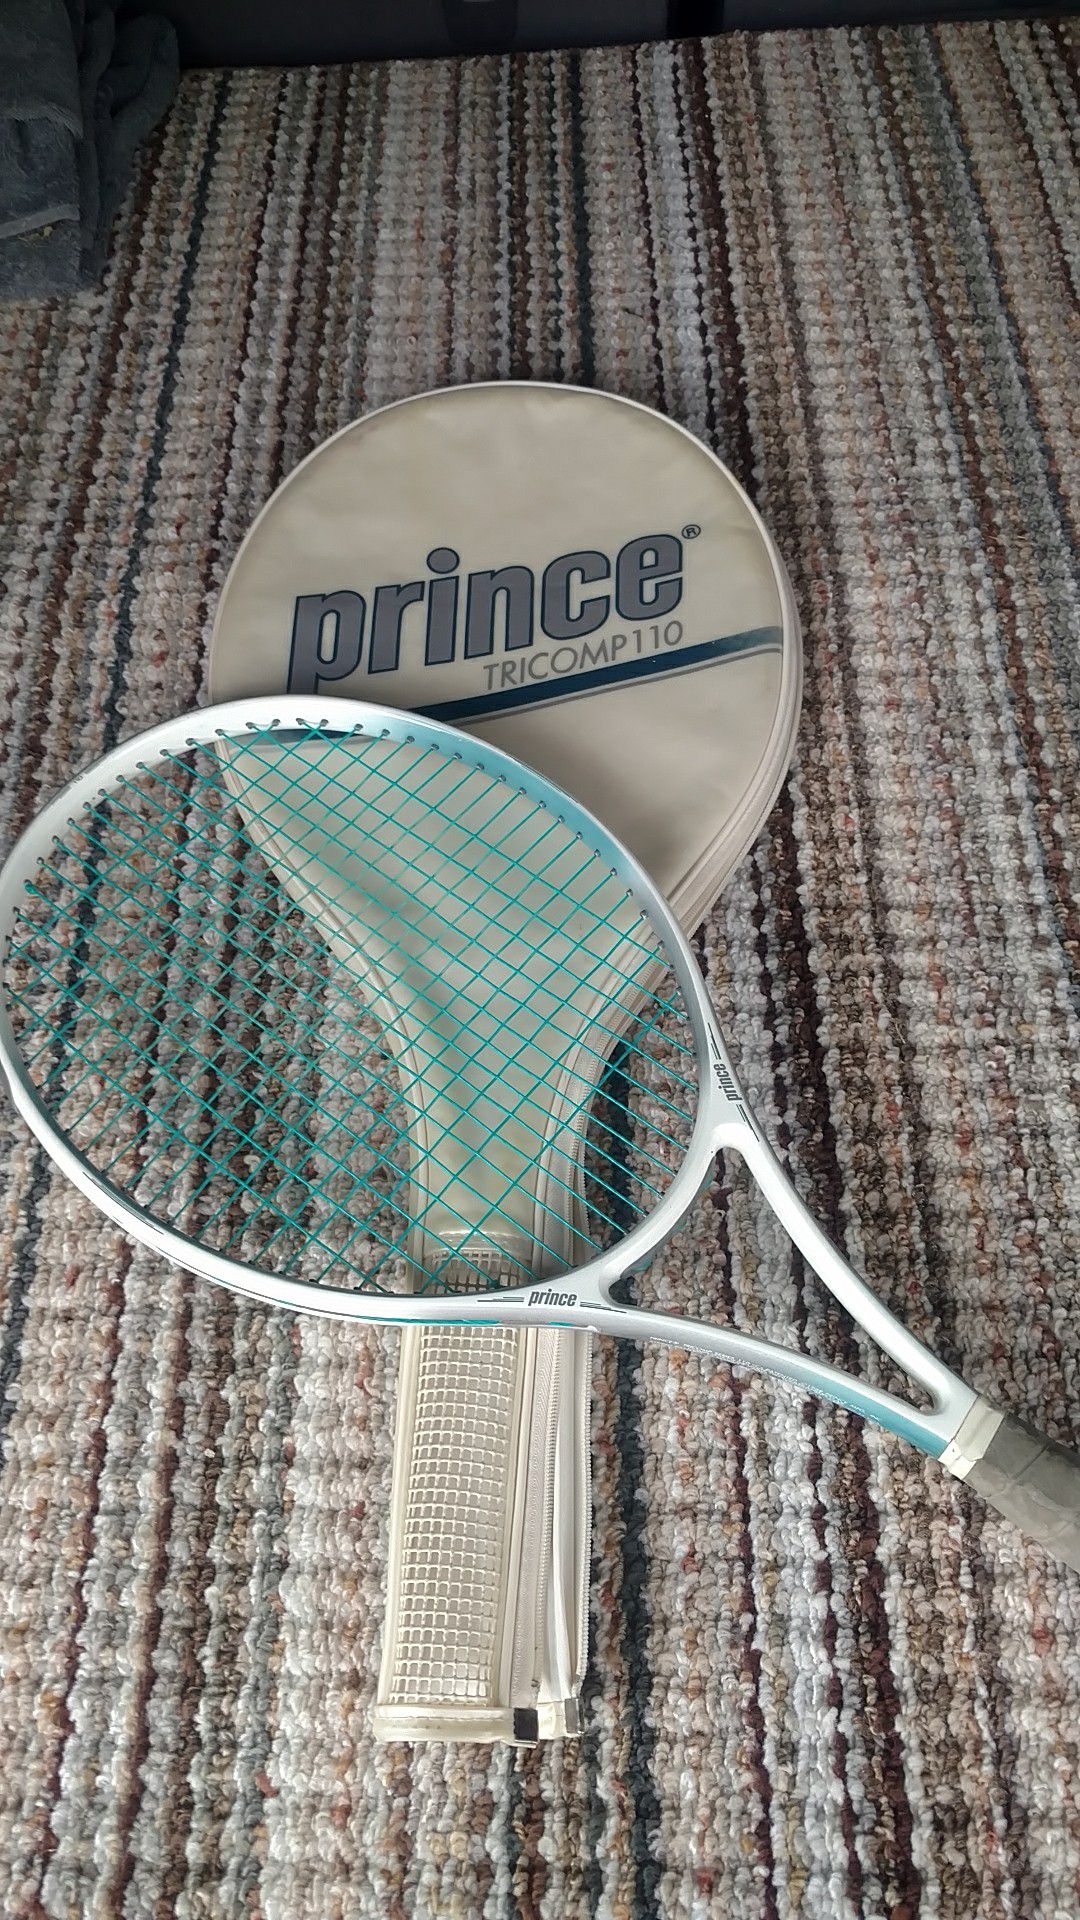 Prince TriCOMP 110 tennis racket